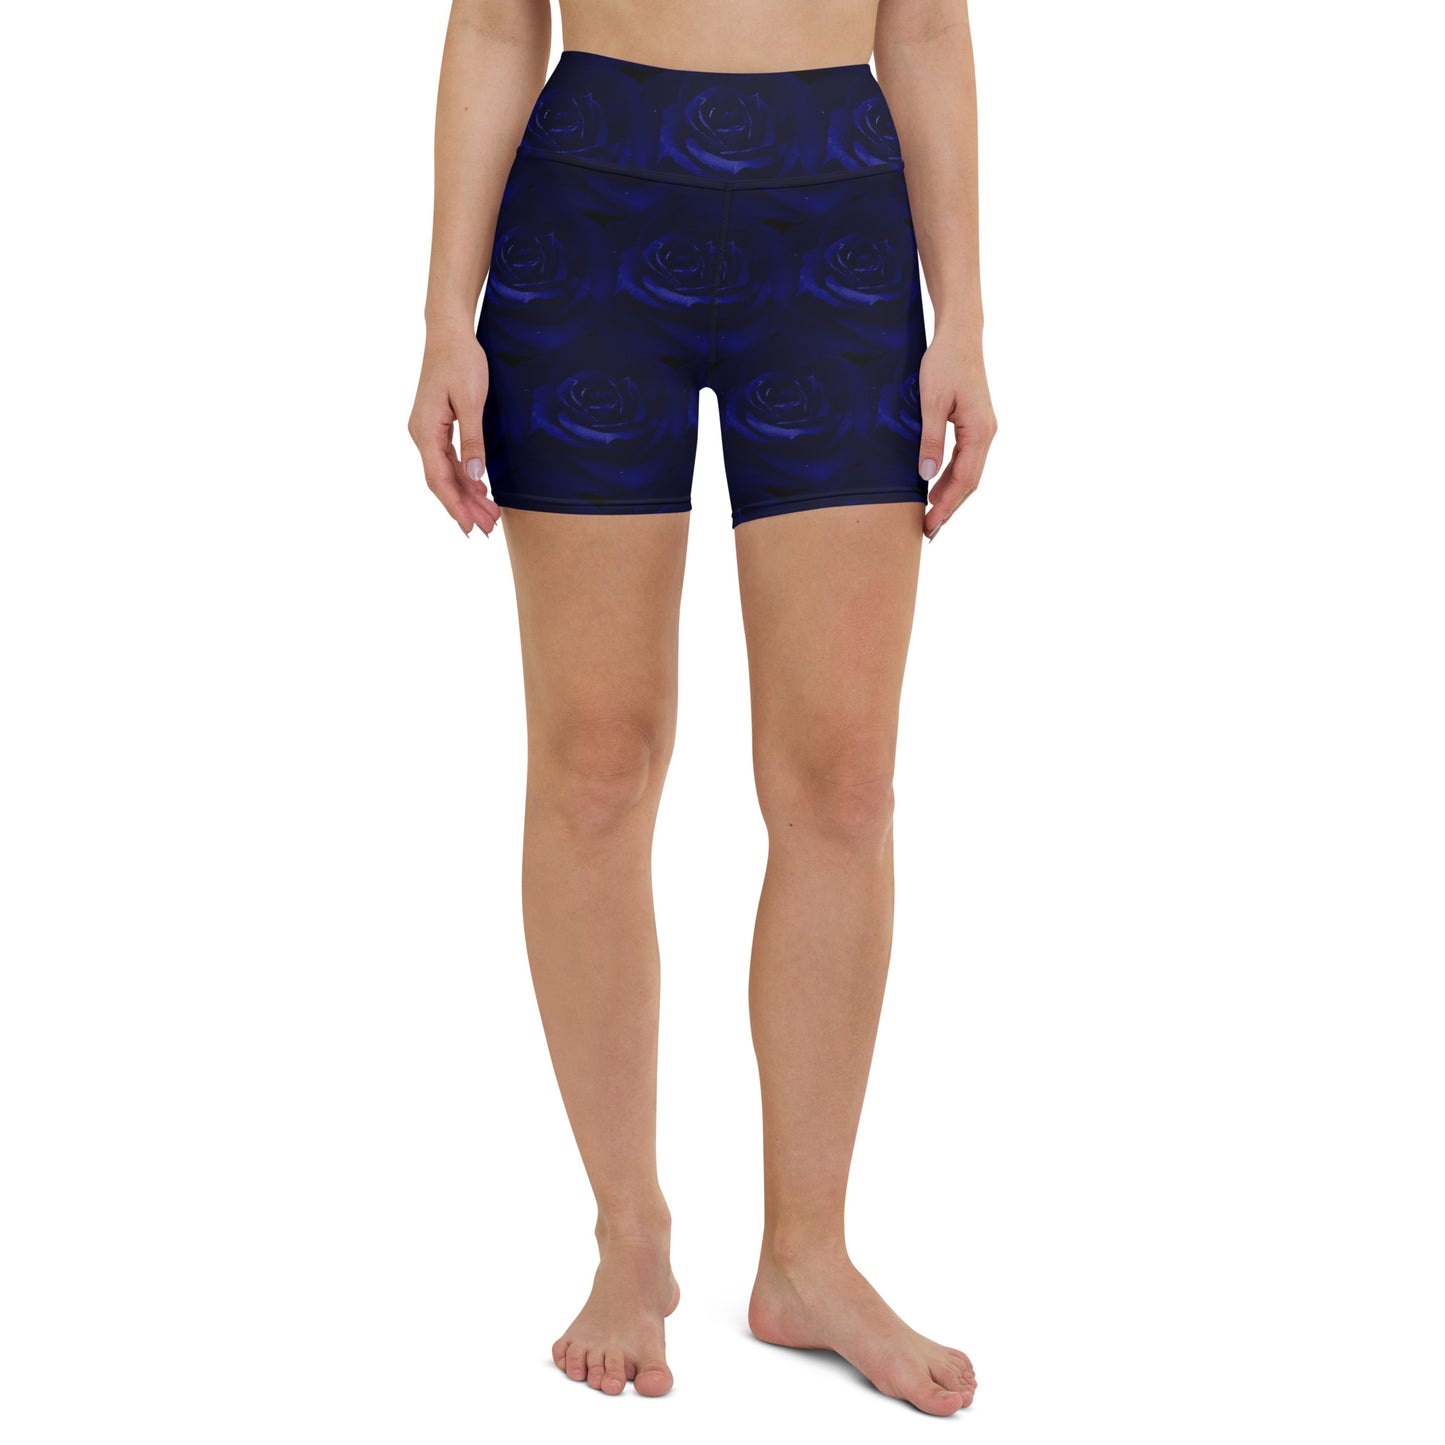 Dark Blue Rose Yoga-Type Shorts